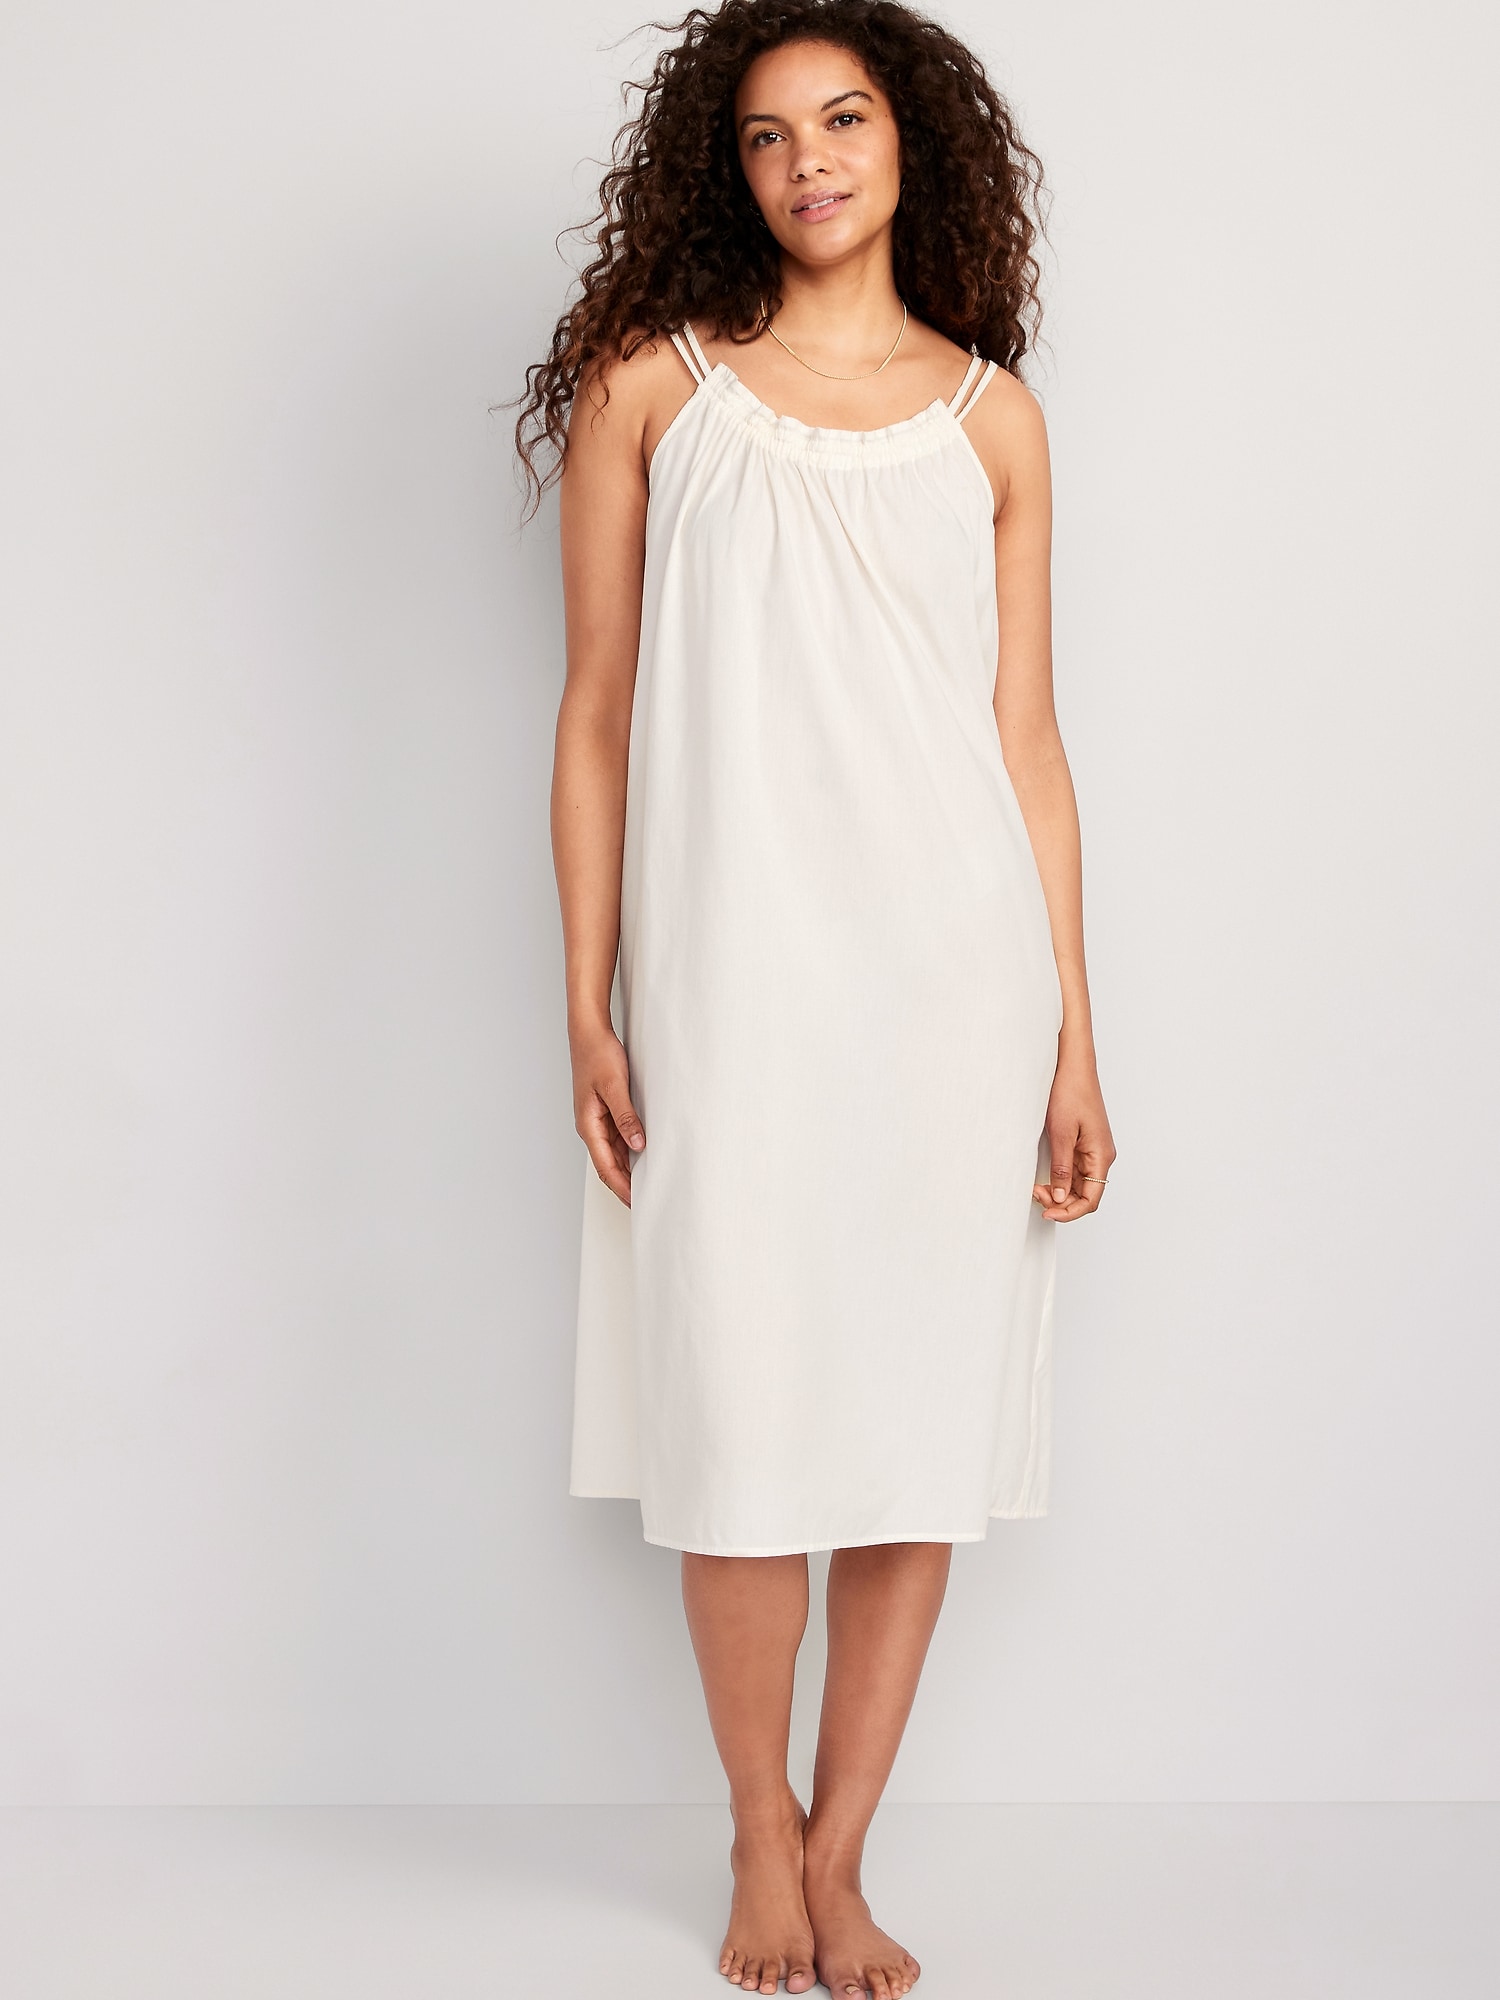 White Cotton Cami Dress